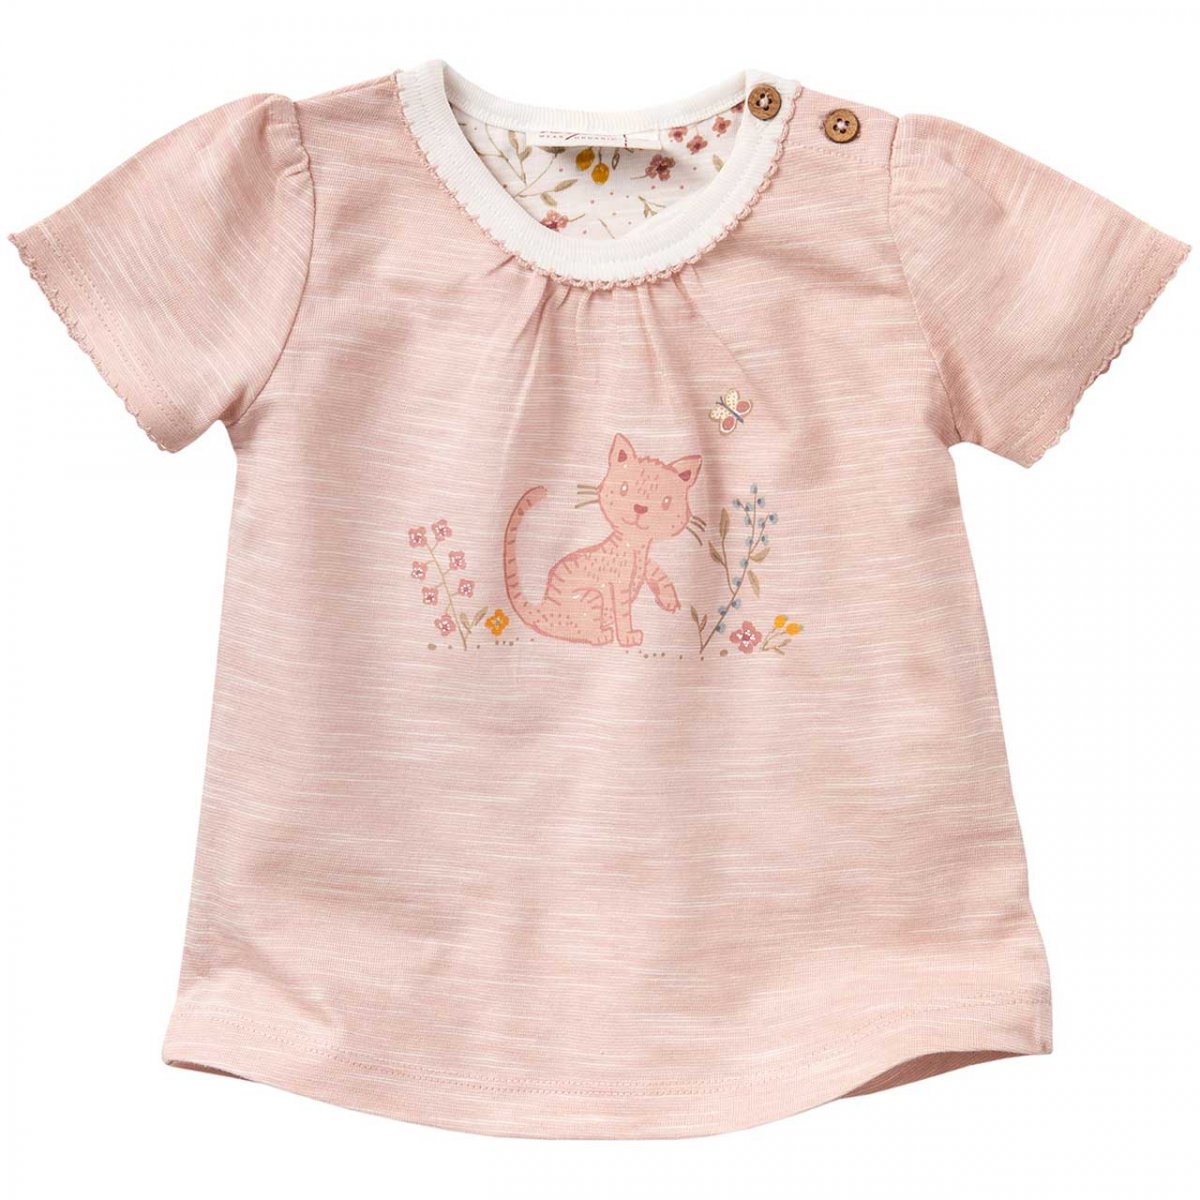 T-shirt Gattino per bambina in puro coton biologico